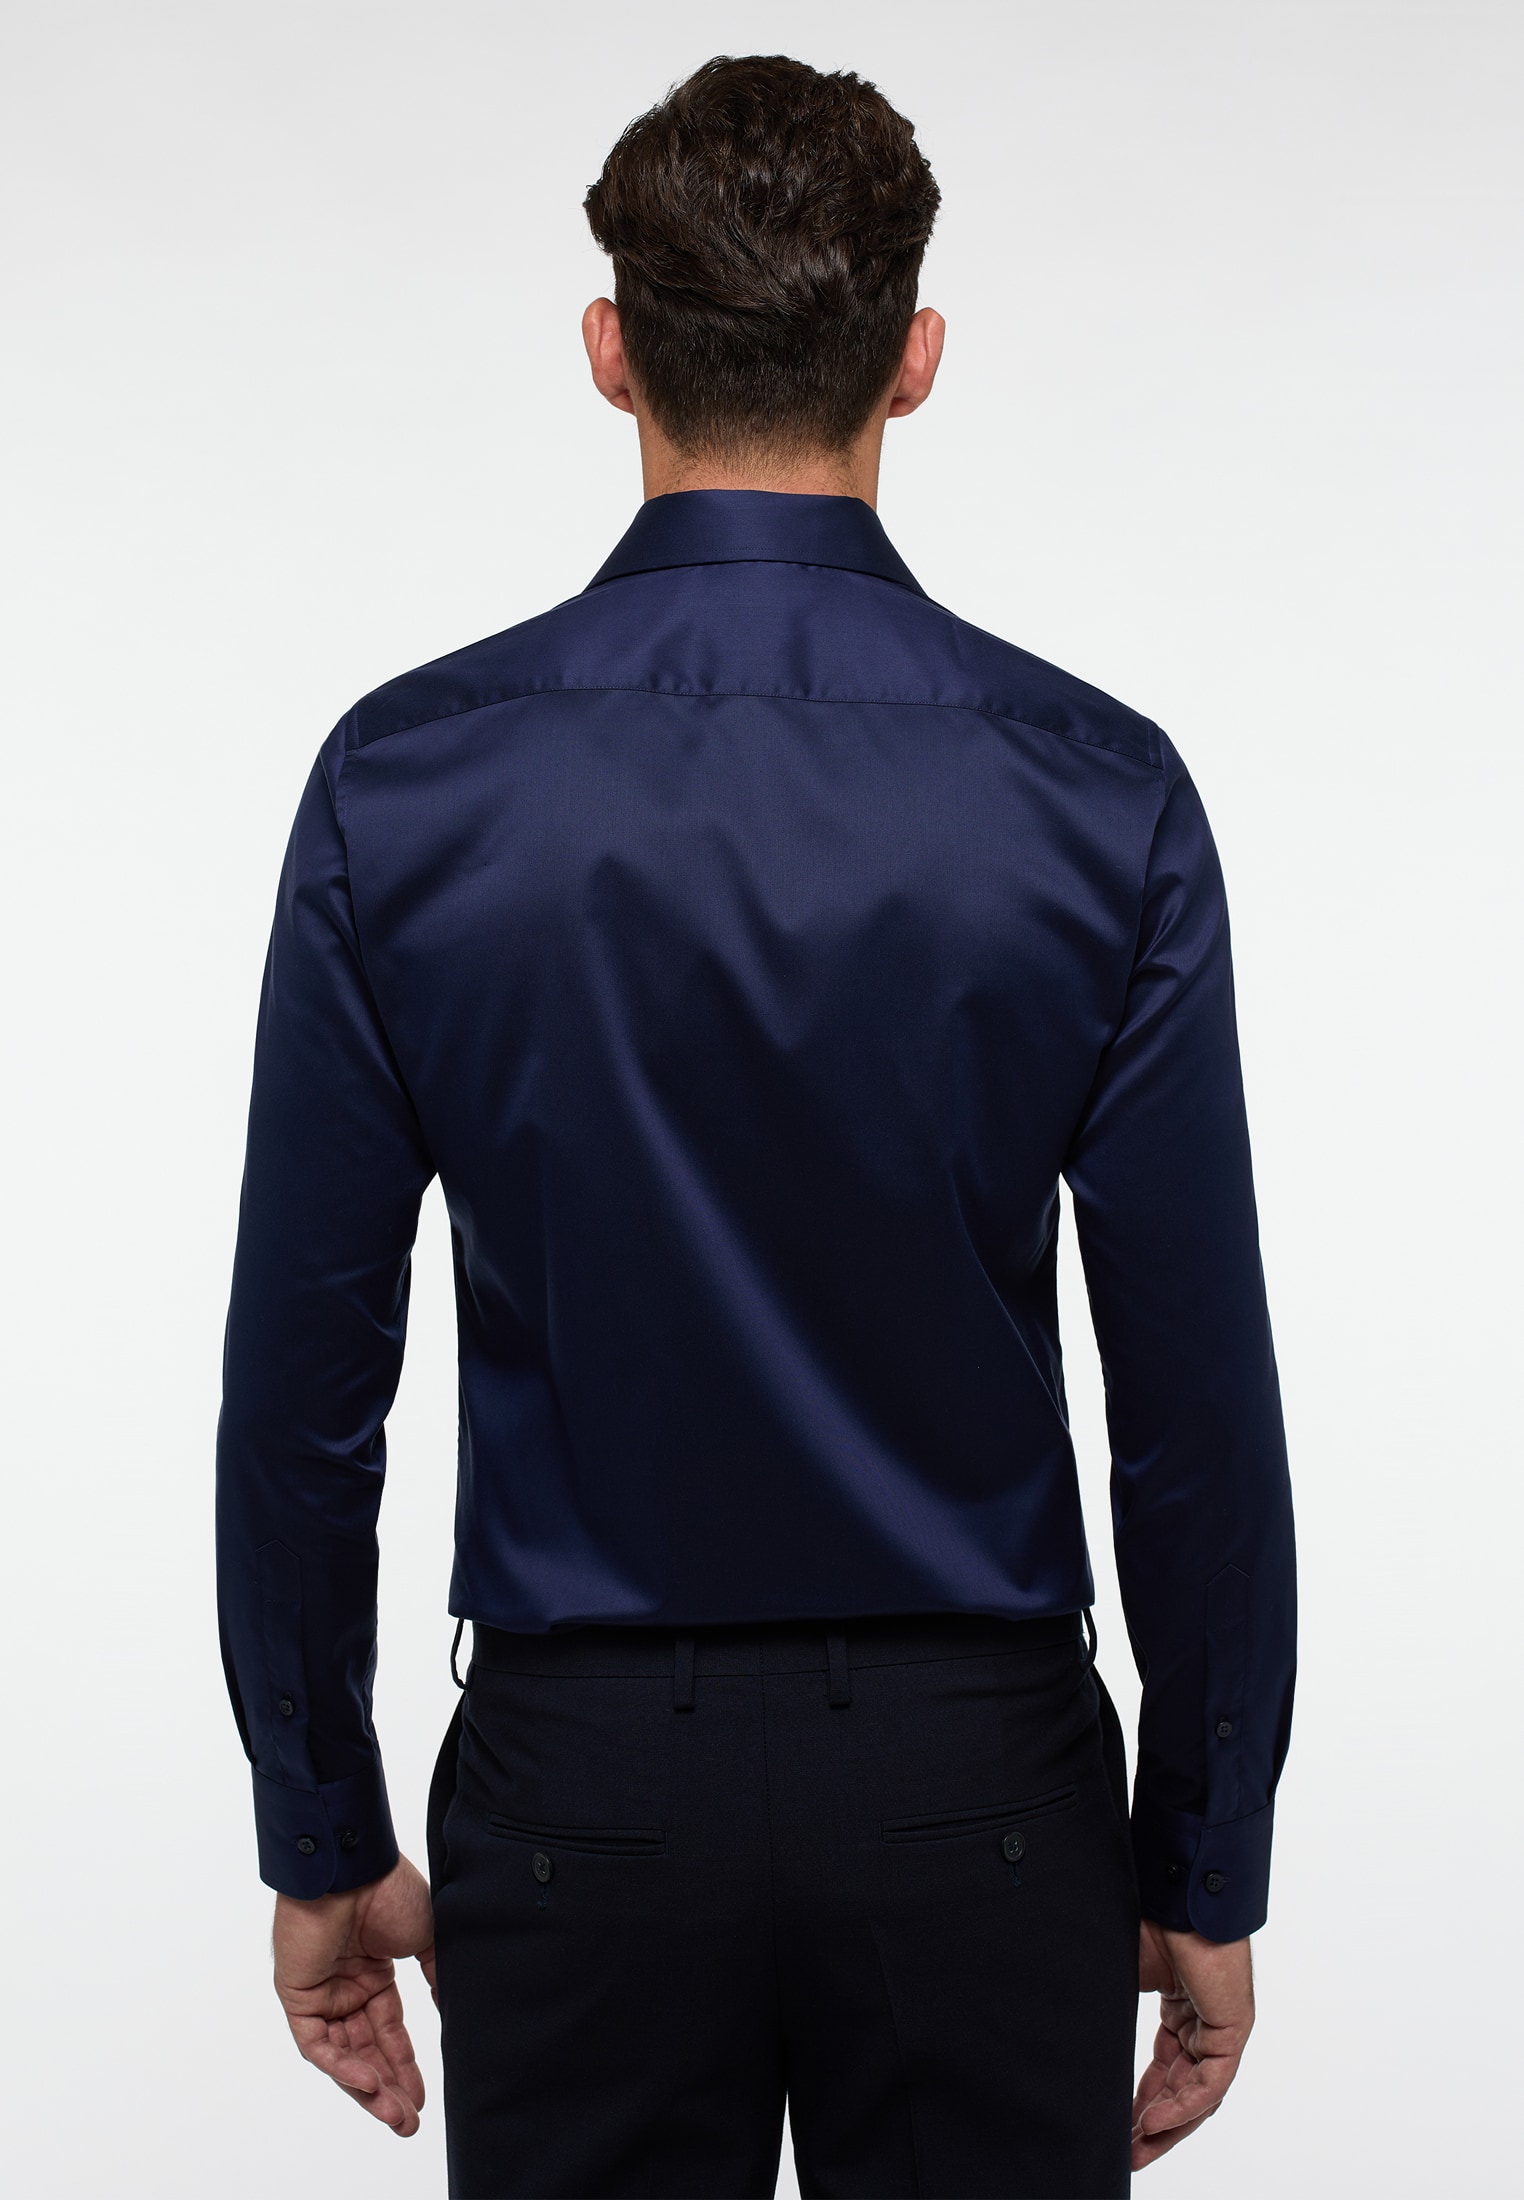 SLIM FIT Luxury | | Langarm 44 Shirt 1SH04299-01-81-44-1/1 unifarben dunkelblau dunkelblau | | in